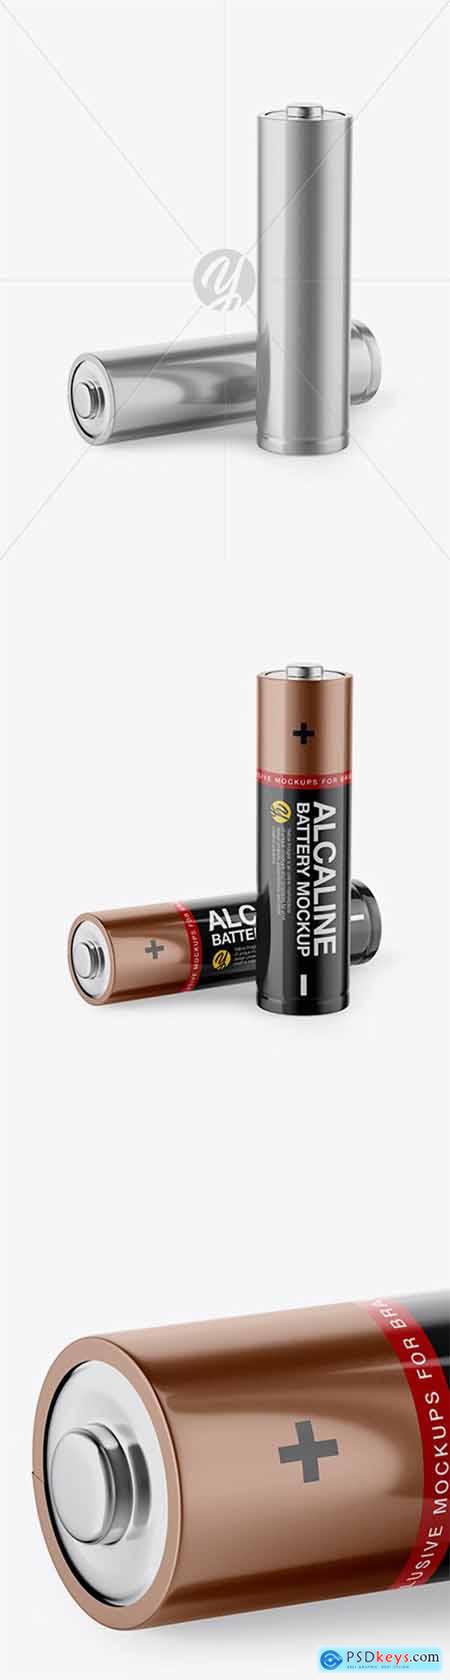 2 AA Batteries Mockup - Half Side View 20491